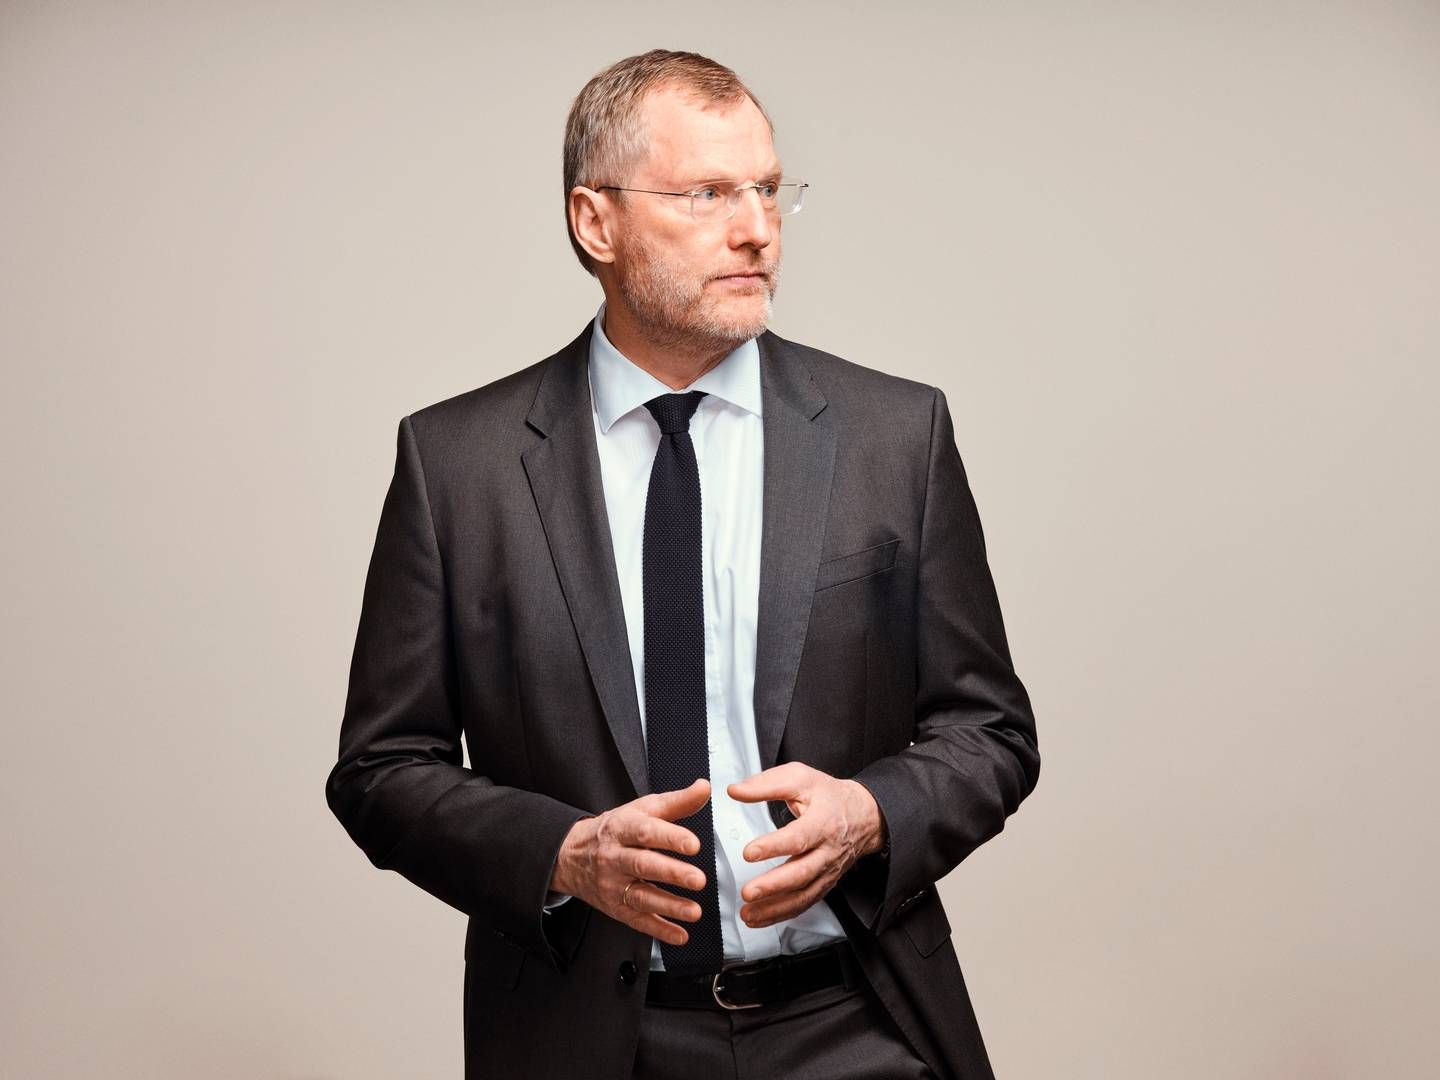 Steen Michael Erichsen har været adm. direktør i Velliv siden 2008 og har en fortid som assurandør. | Foto: Pr/velliv